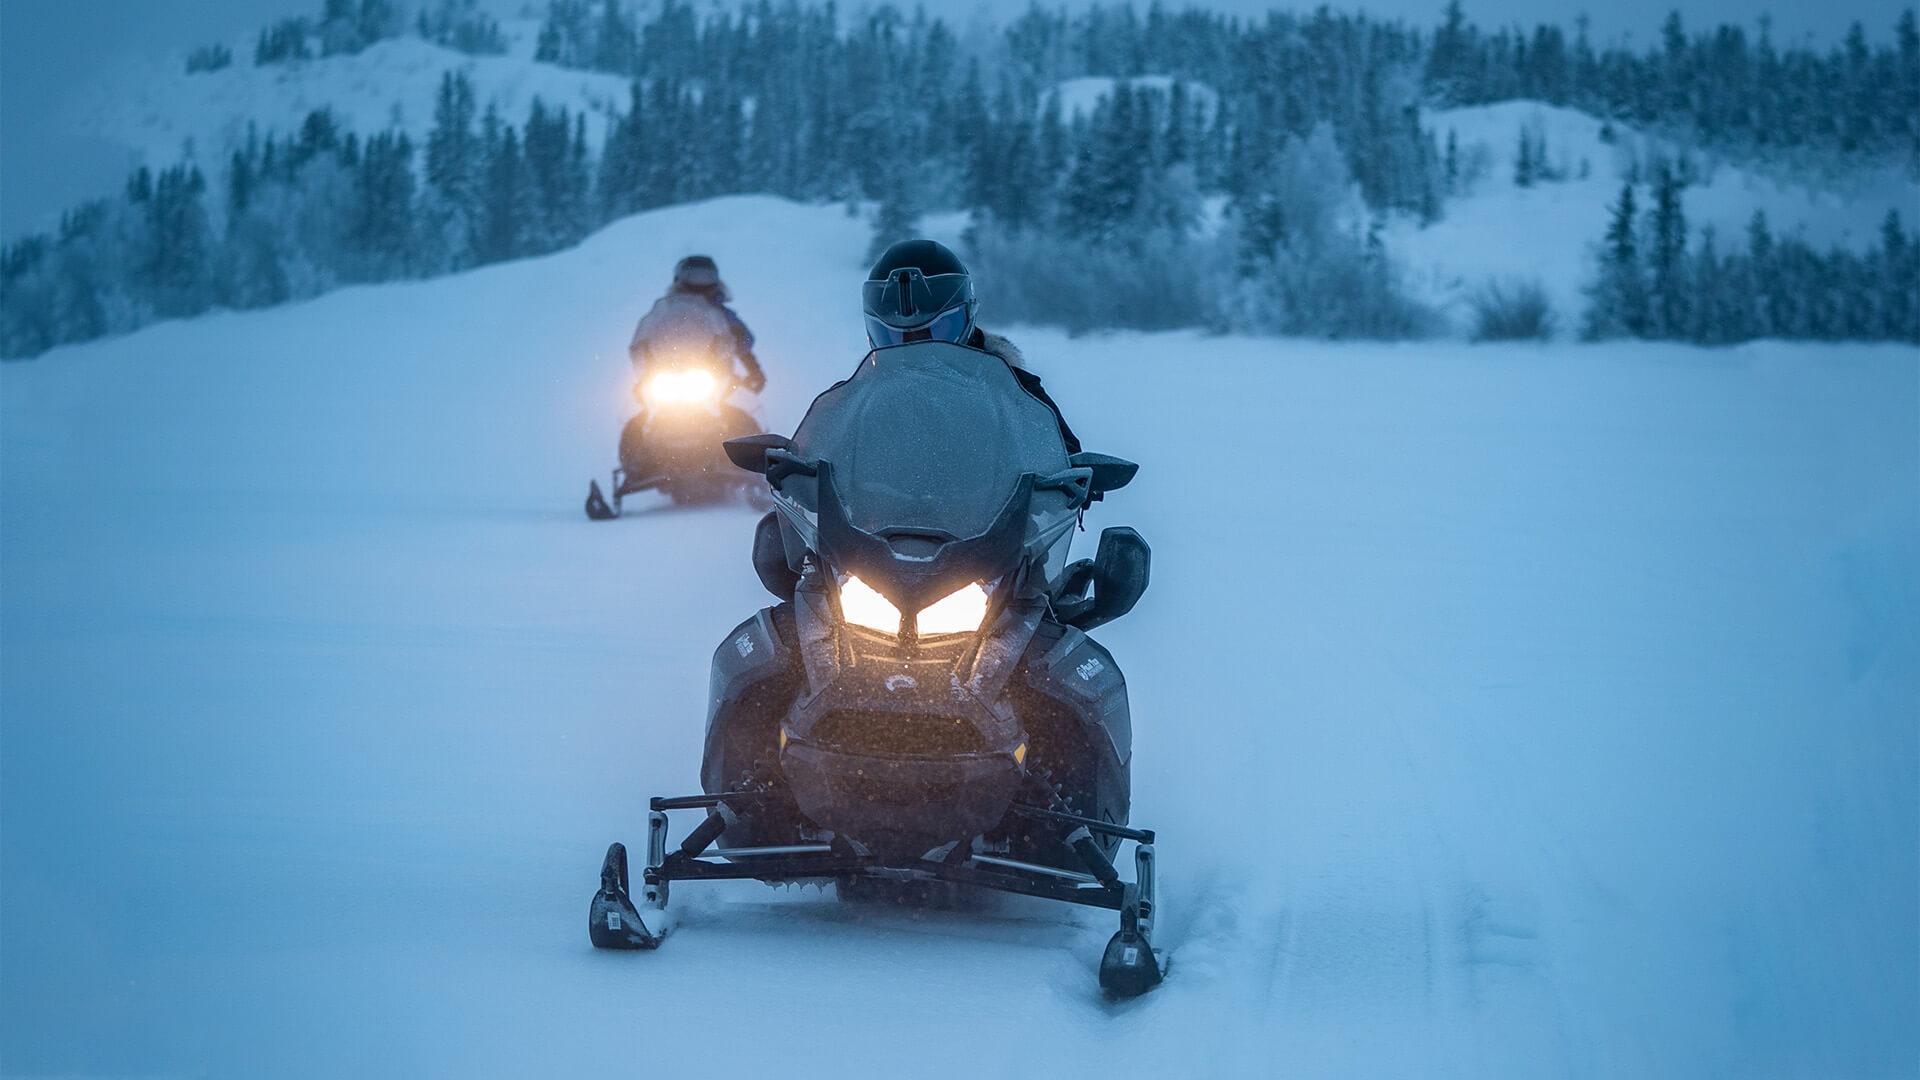 2 snowmobilers driving through a snowy field